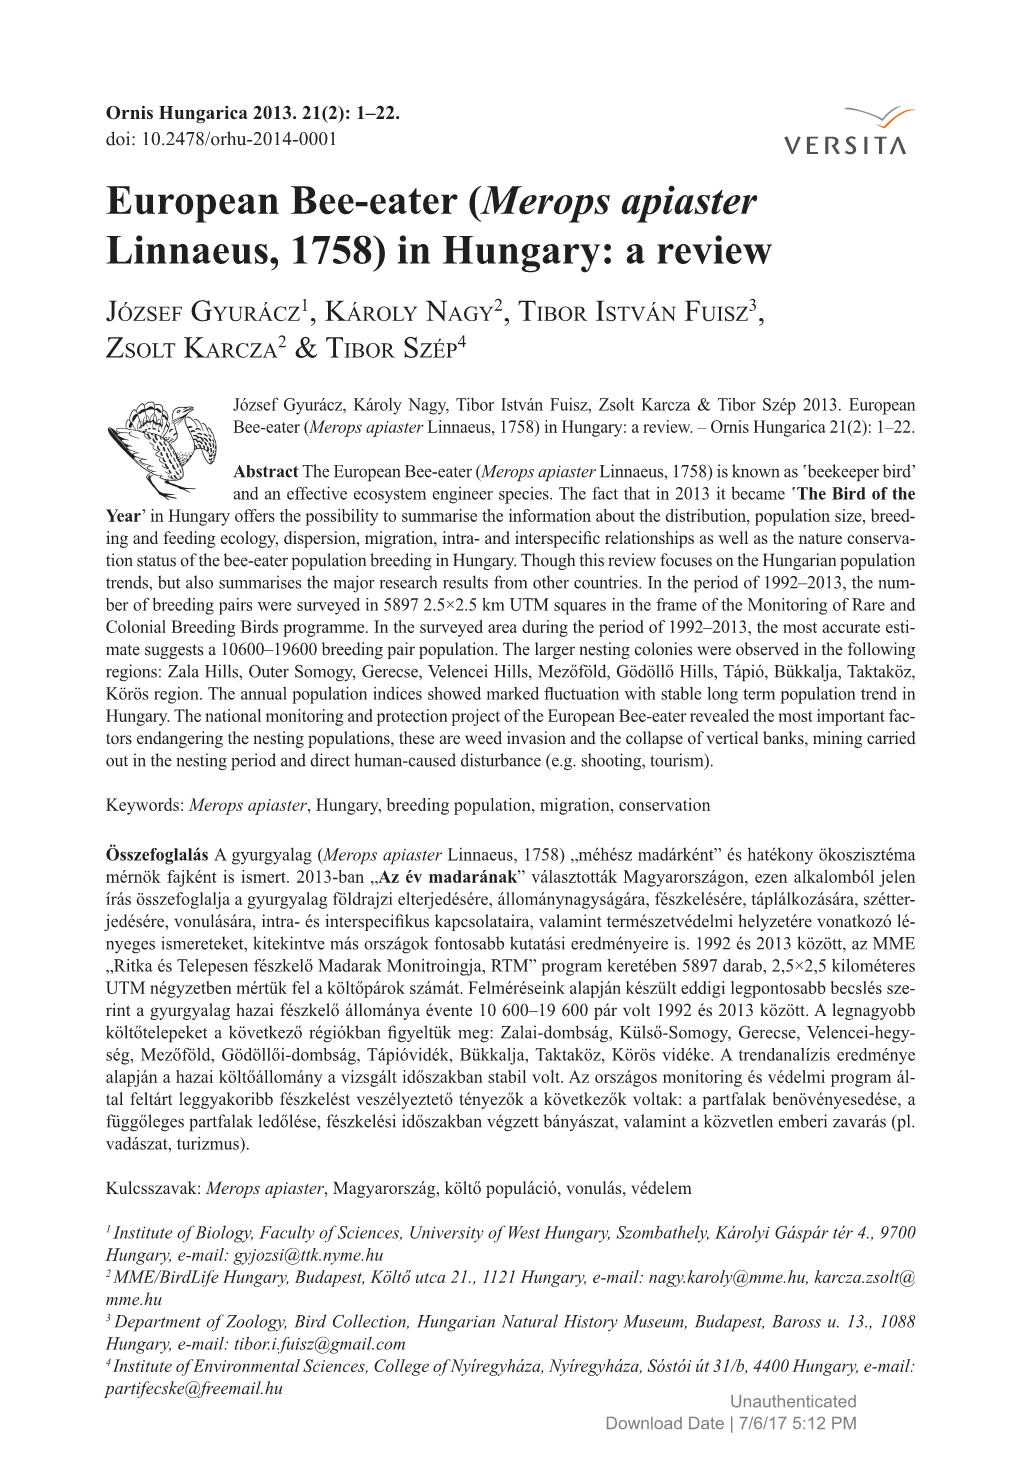 European Bee-Eater (Merops Apiaster Linnaeus, 1758) in Hungary: a Review